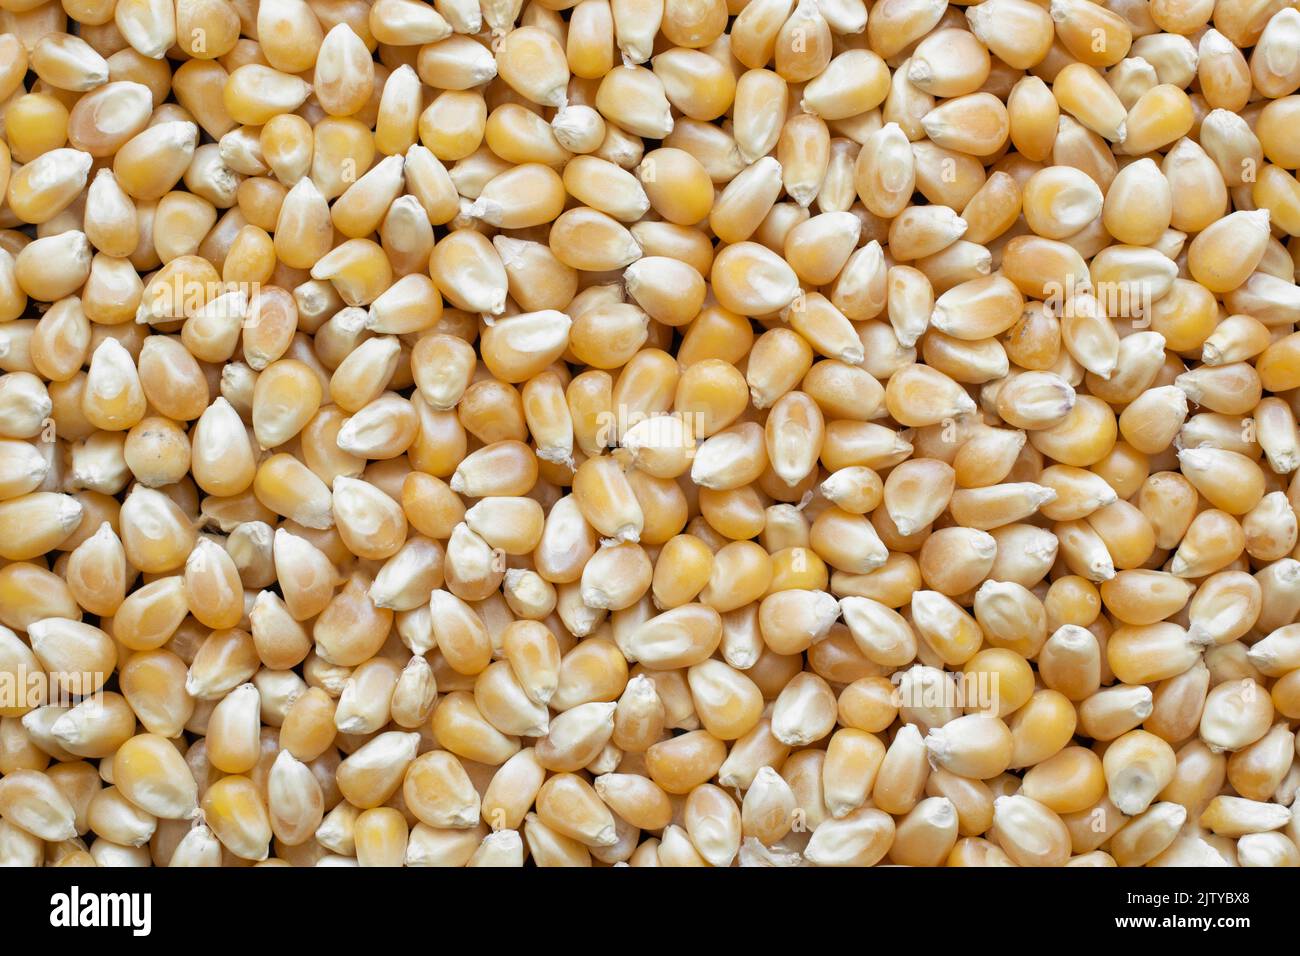 Unpopped popcorn kernels filling the frame Stock Photo